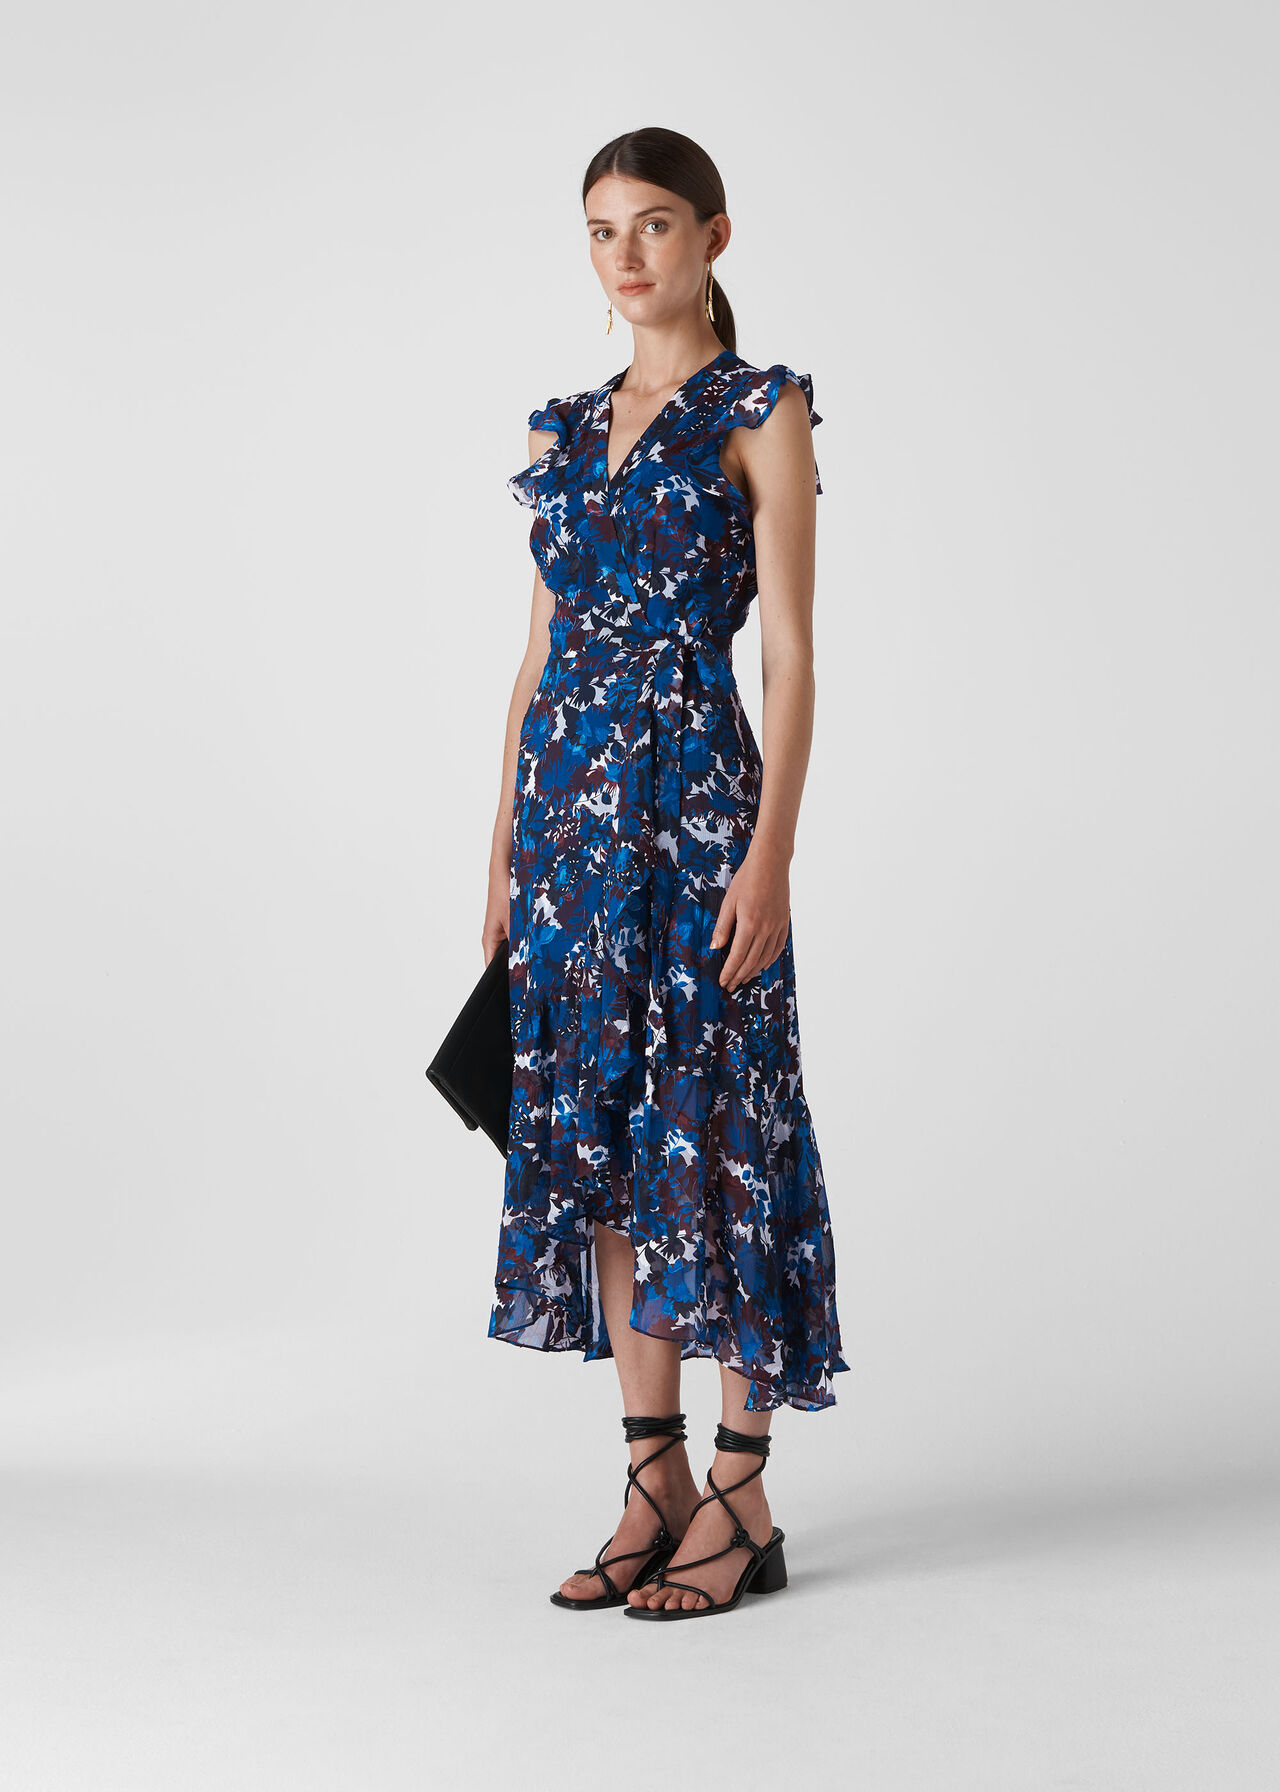 Williamsburg Print Dress | WHISTLES